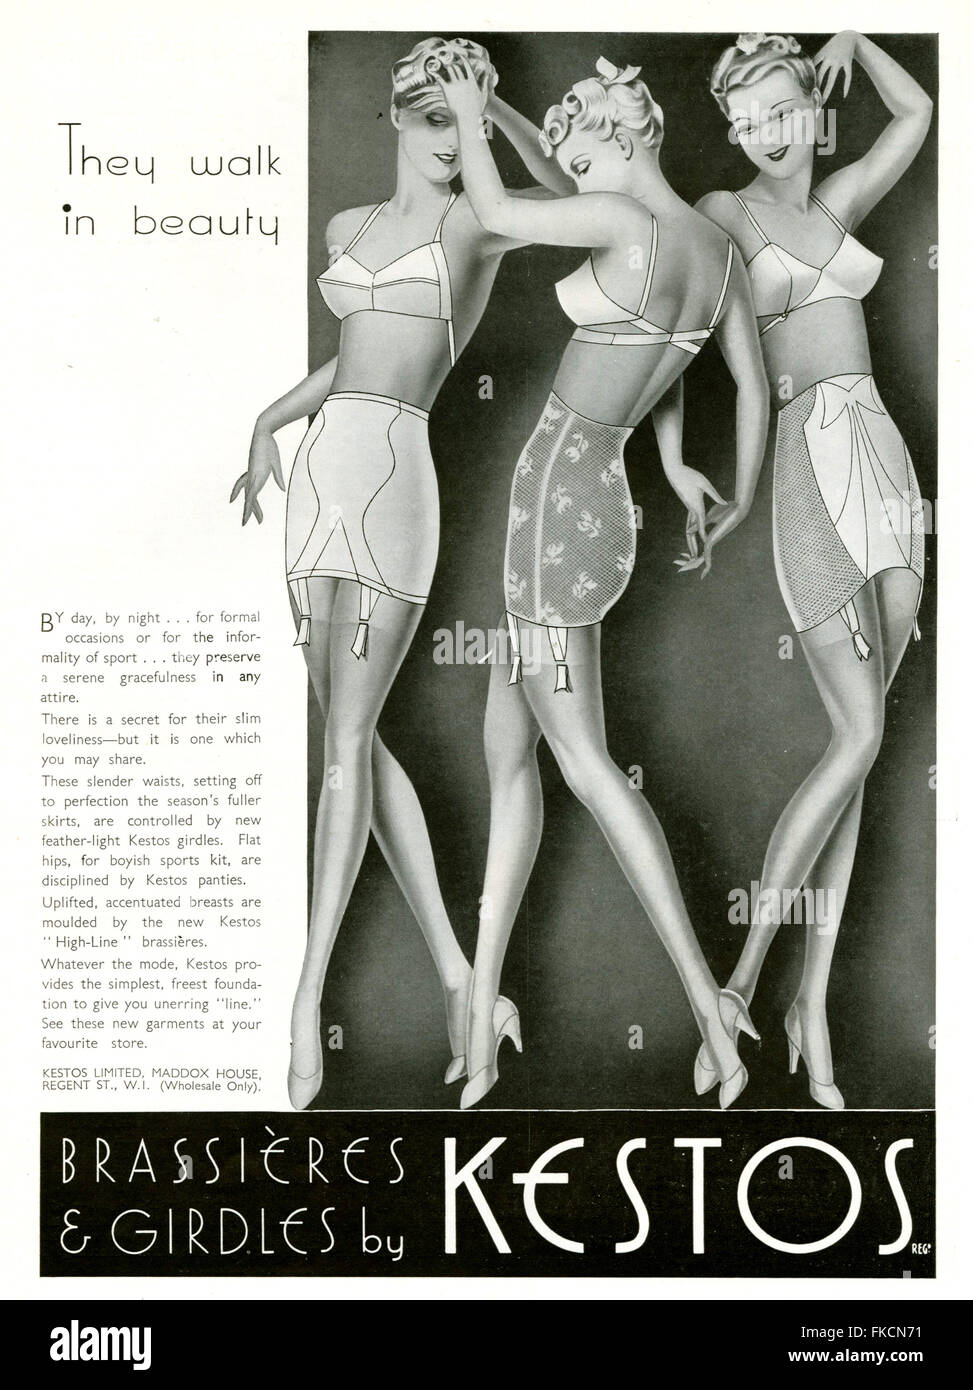 1930er Jahre UK Kestos Magazin Anzeige Stockfoto